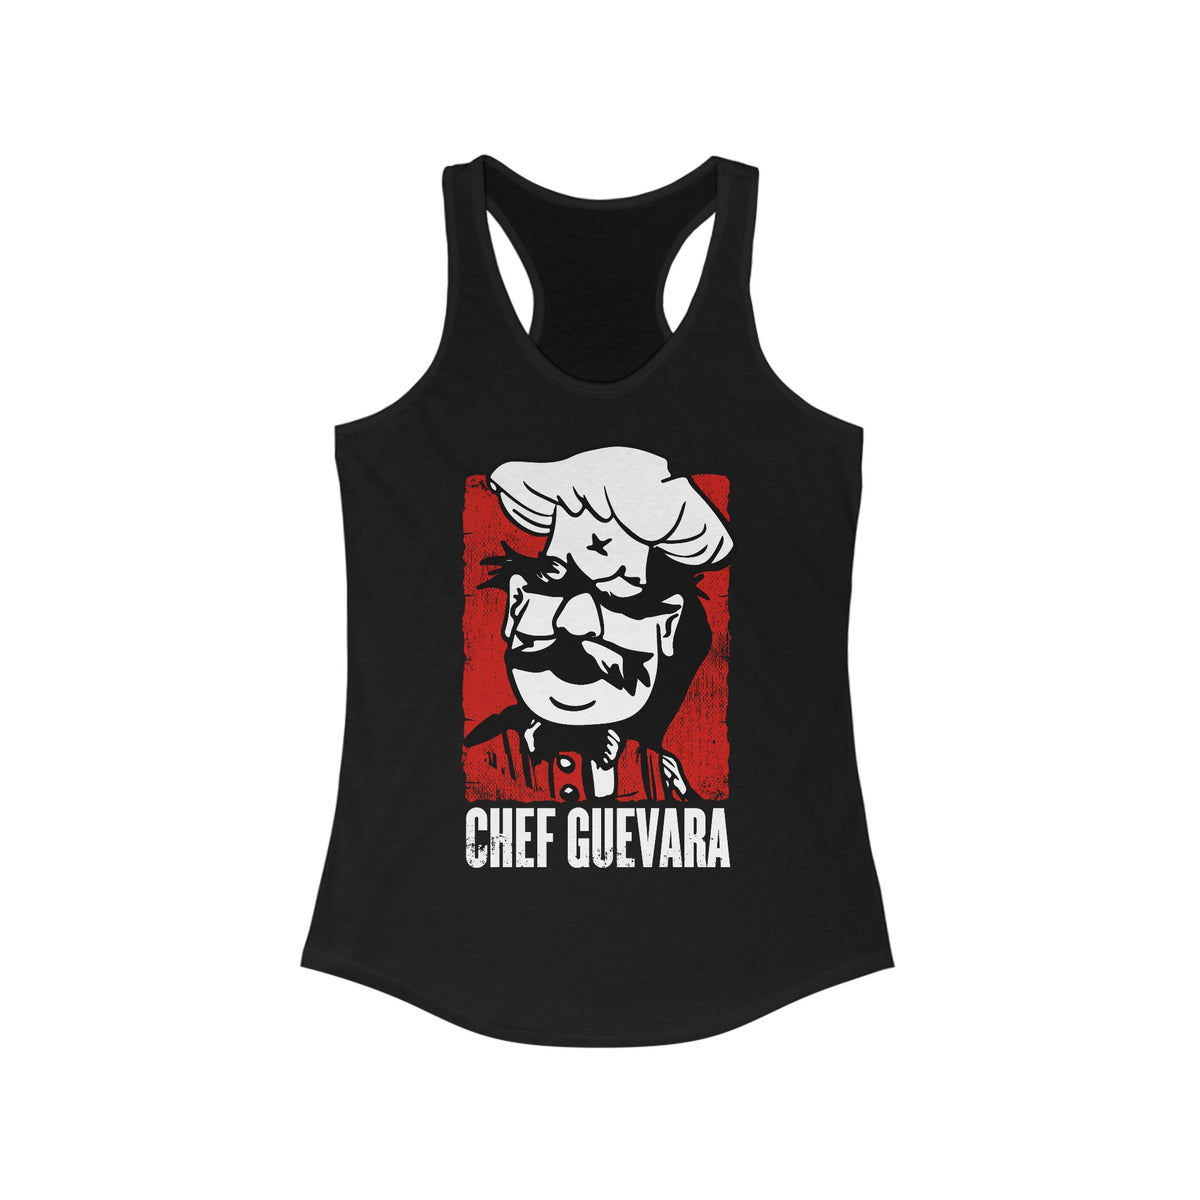 Chef Guevara  - Women's Racerback Tank